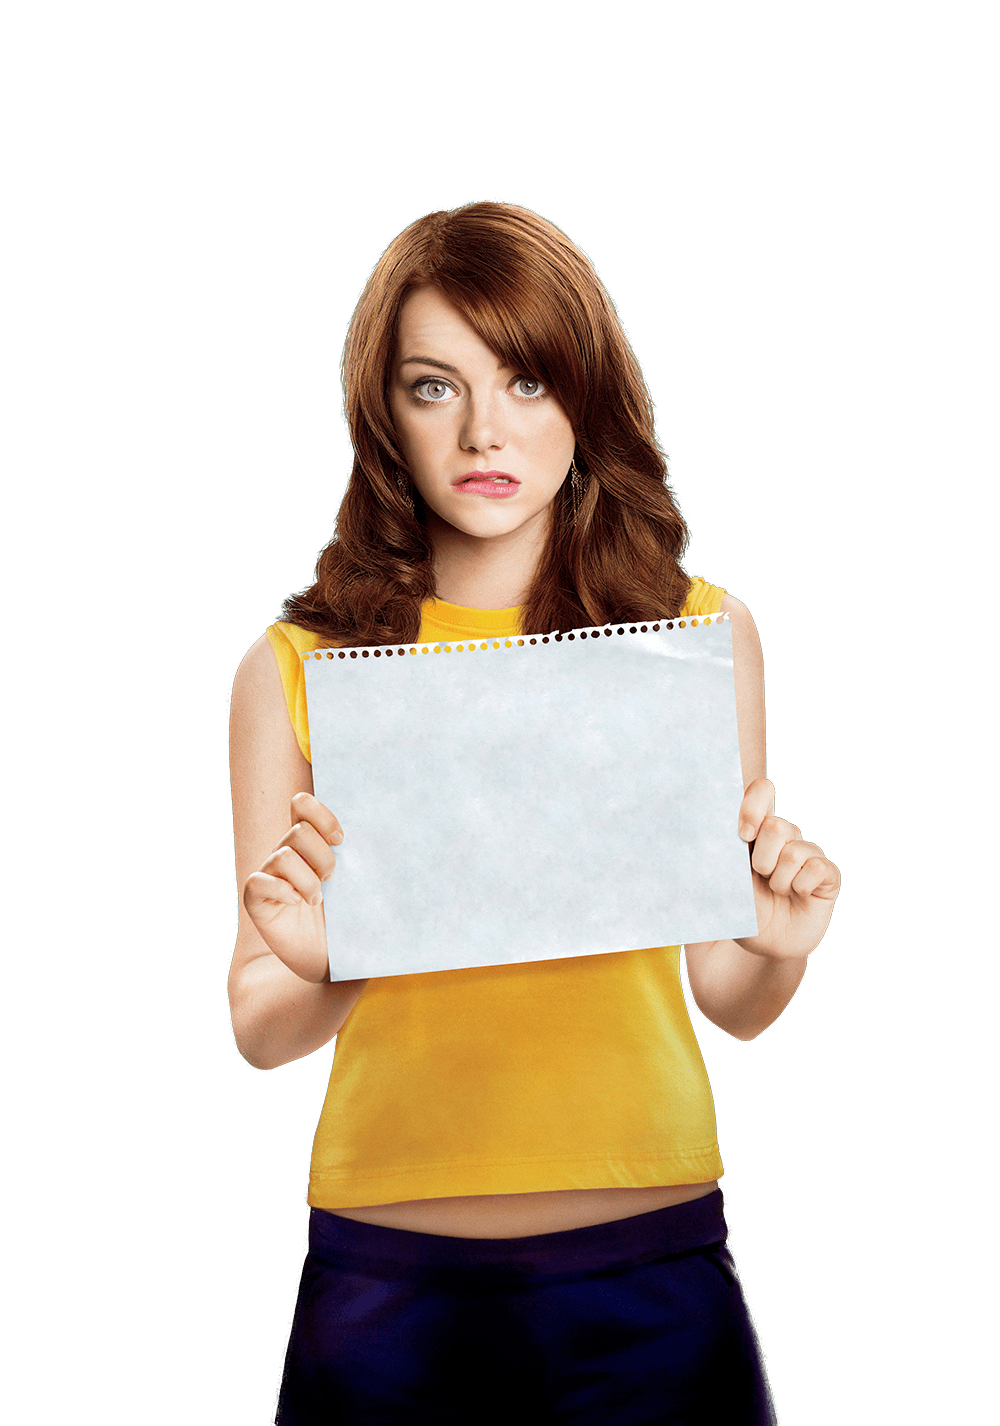 Emma Stone Holding Paper - Emma Stone Clipart